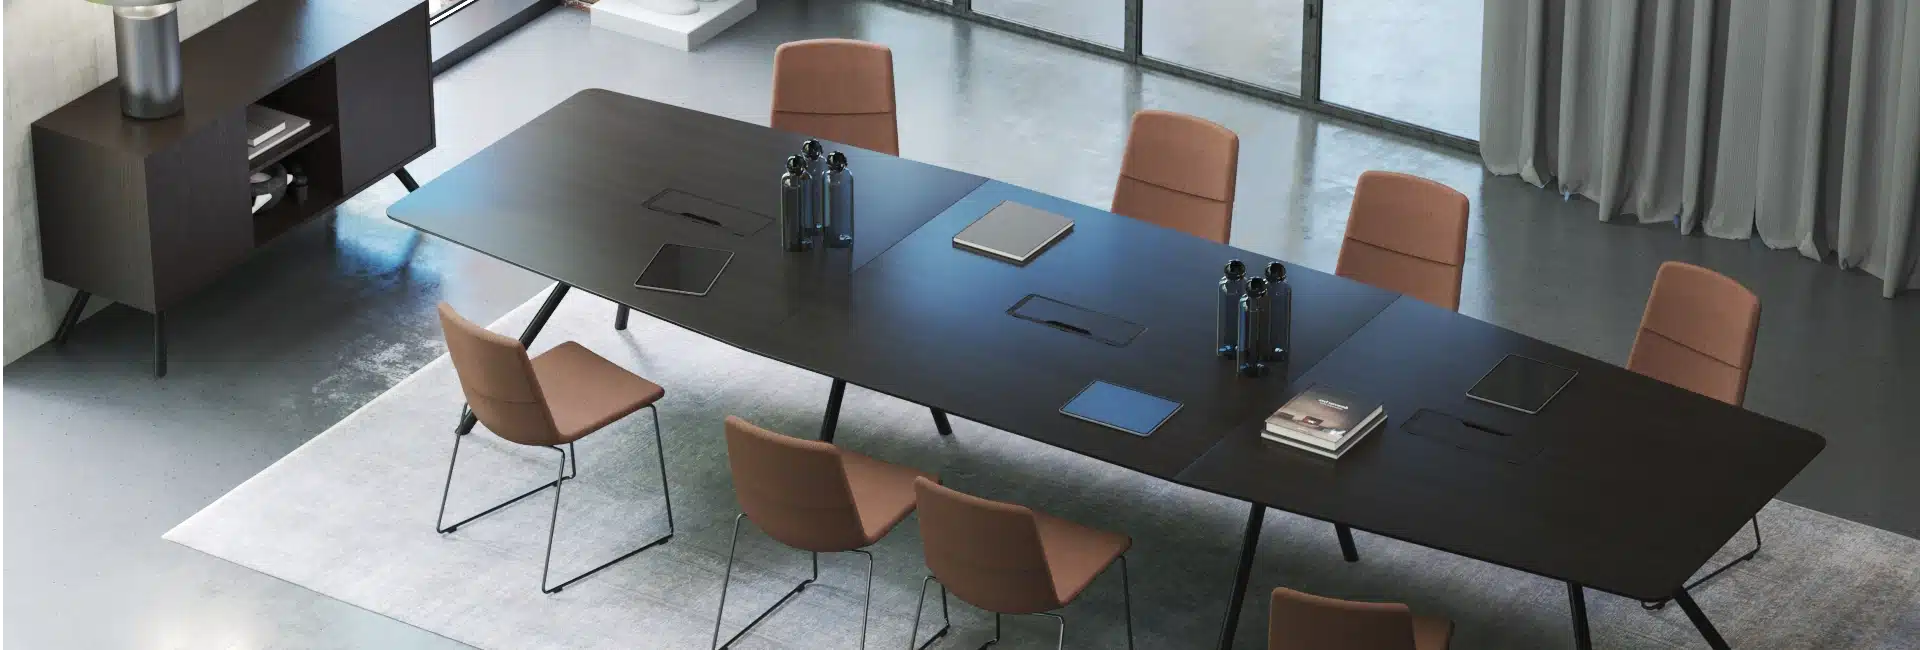 kontormøbler, fellesområde, møtebord